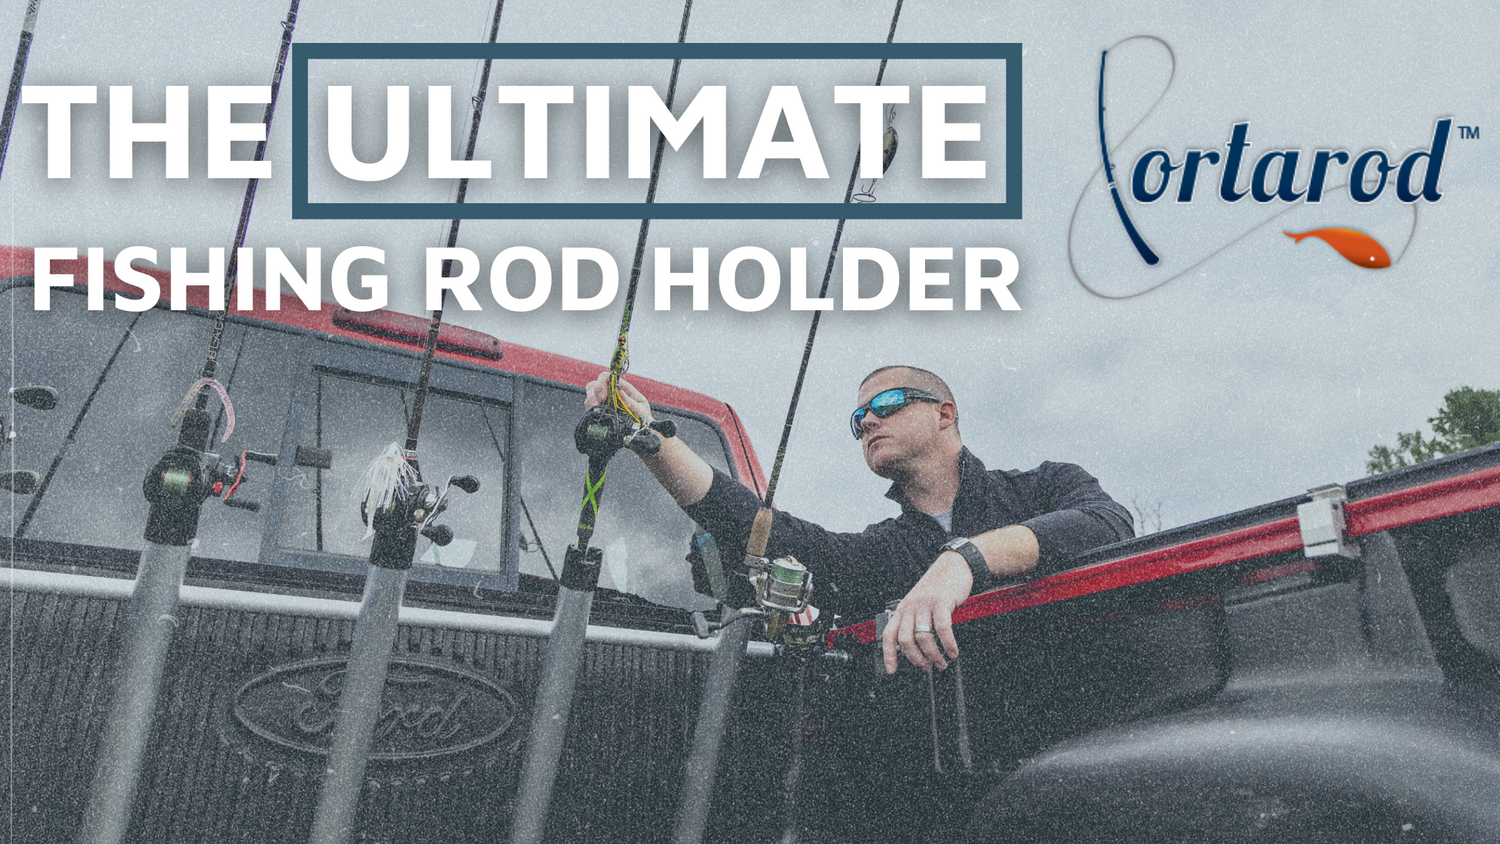 Portarod Offshore 5 Rod Holder